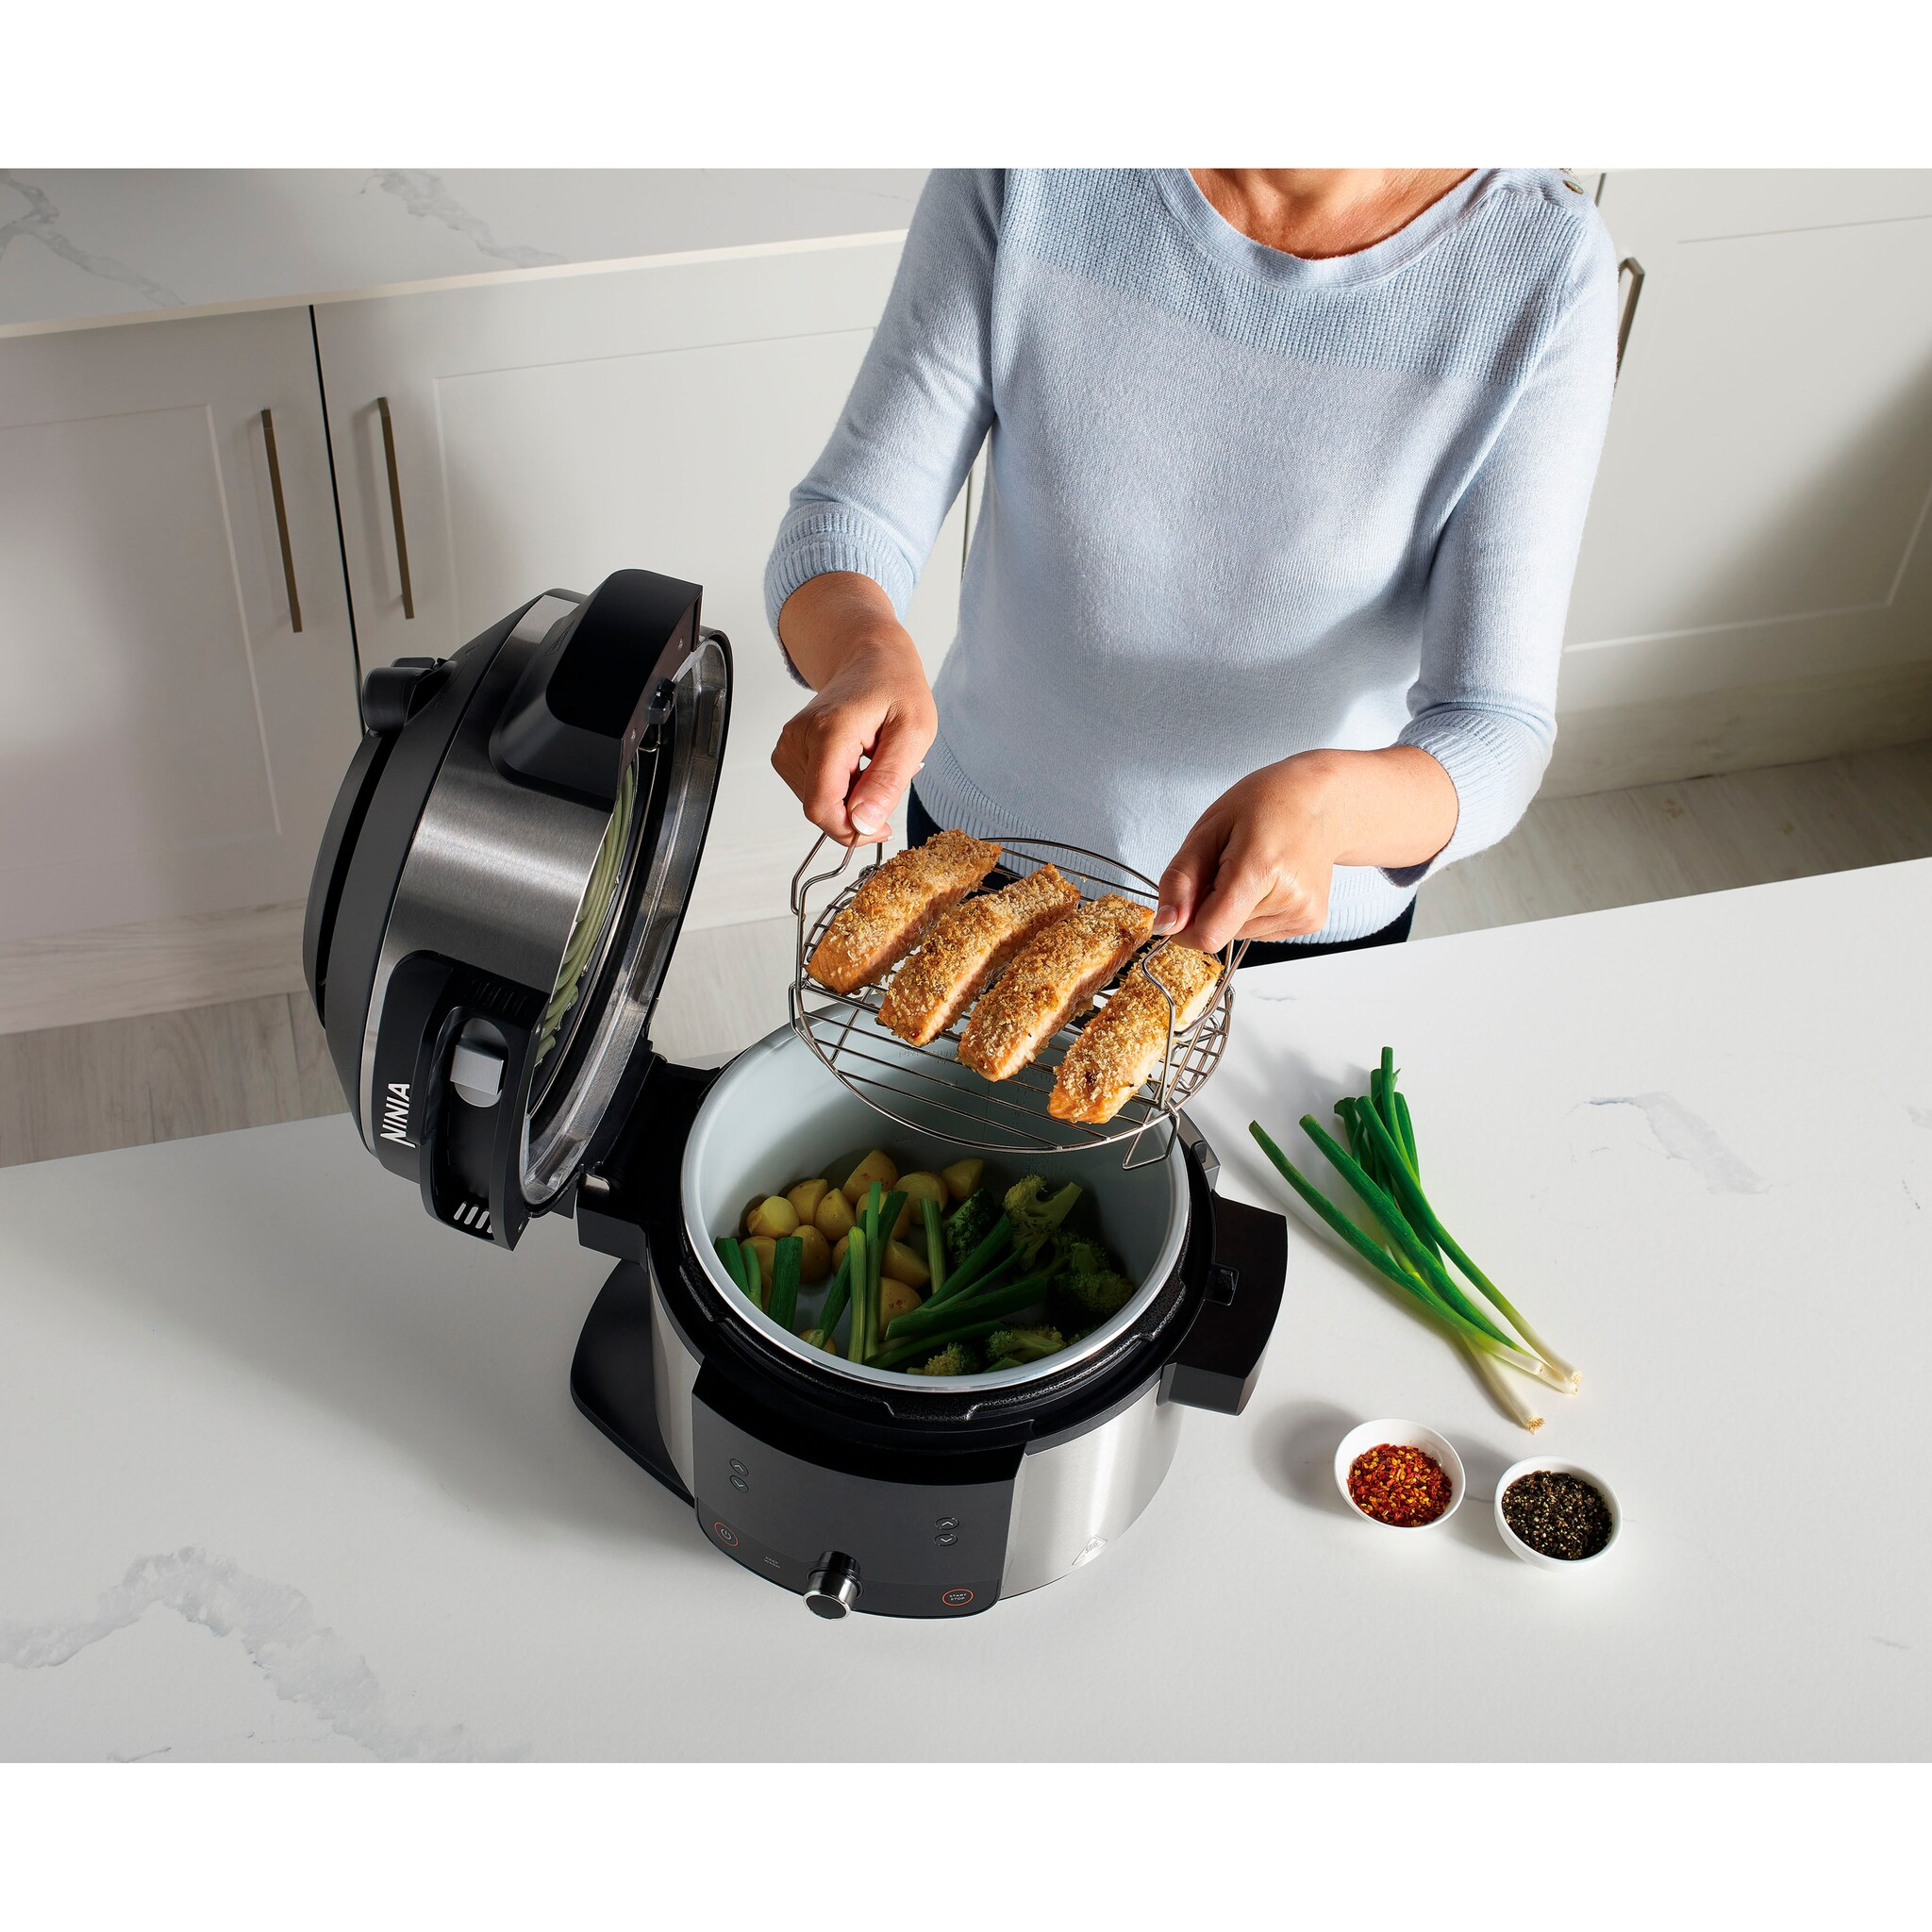 Ninja OL550EU Foodi Multikocher mit SmartLid Multikocher  6L,11-in-1 Multicooker,Heißluftfritteuse,Grillen,